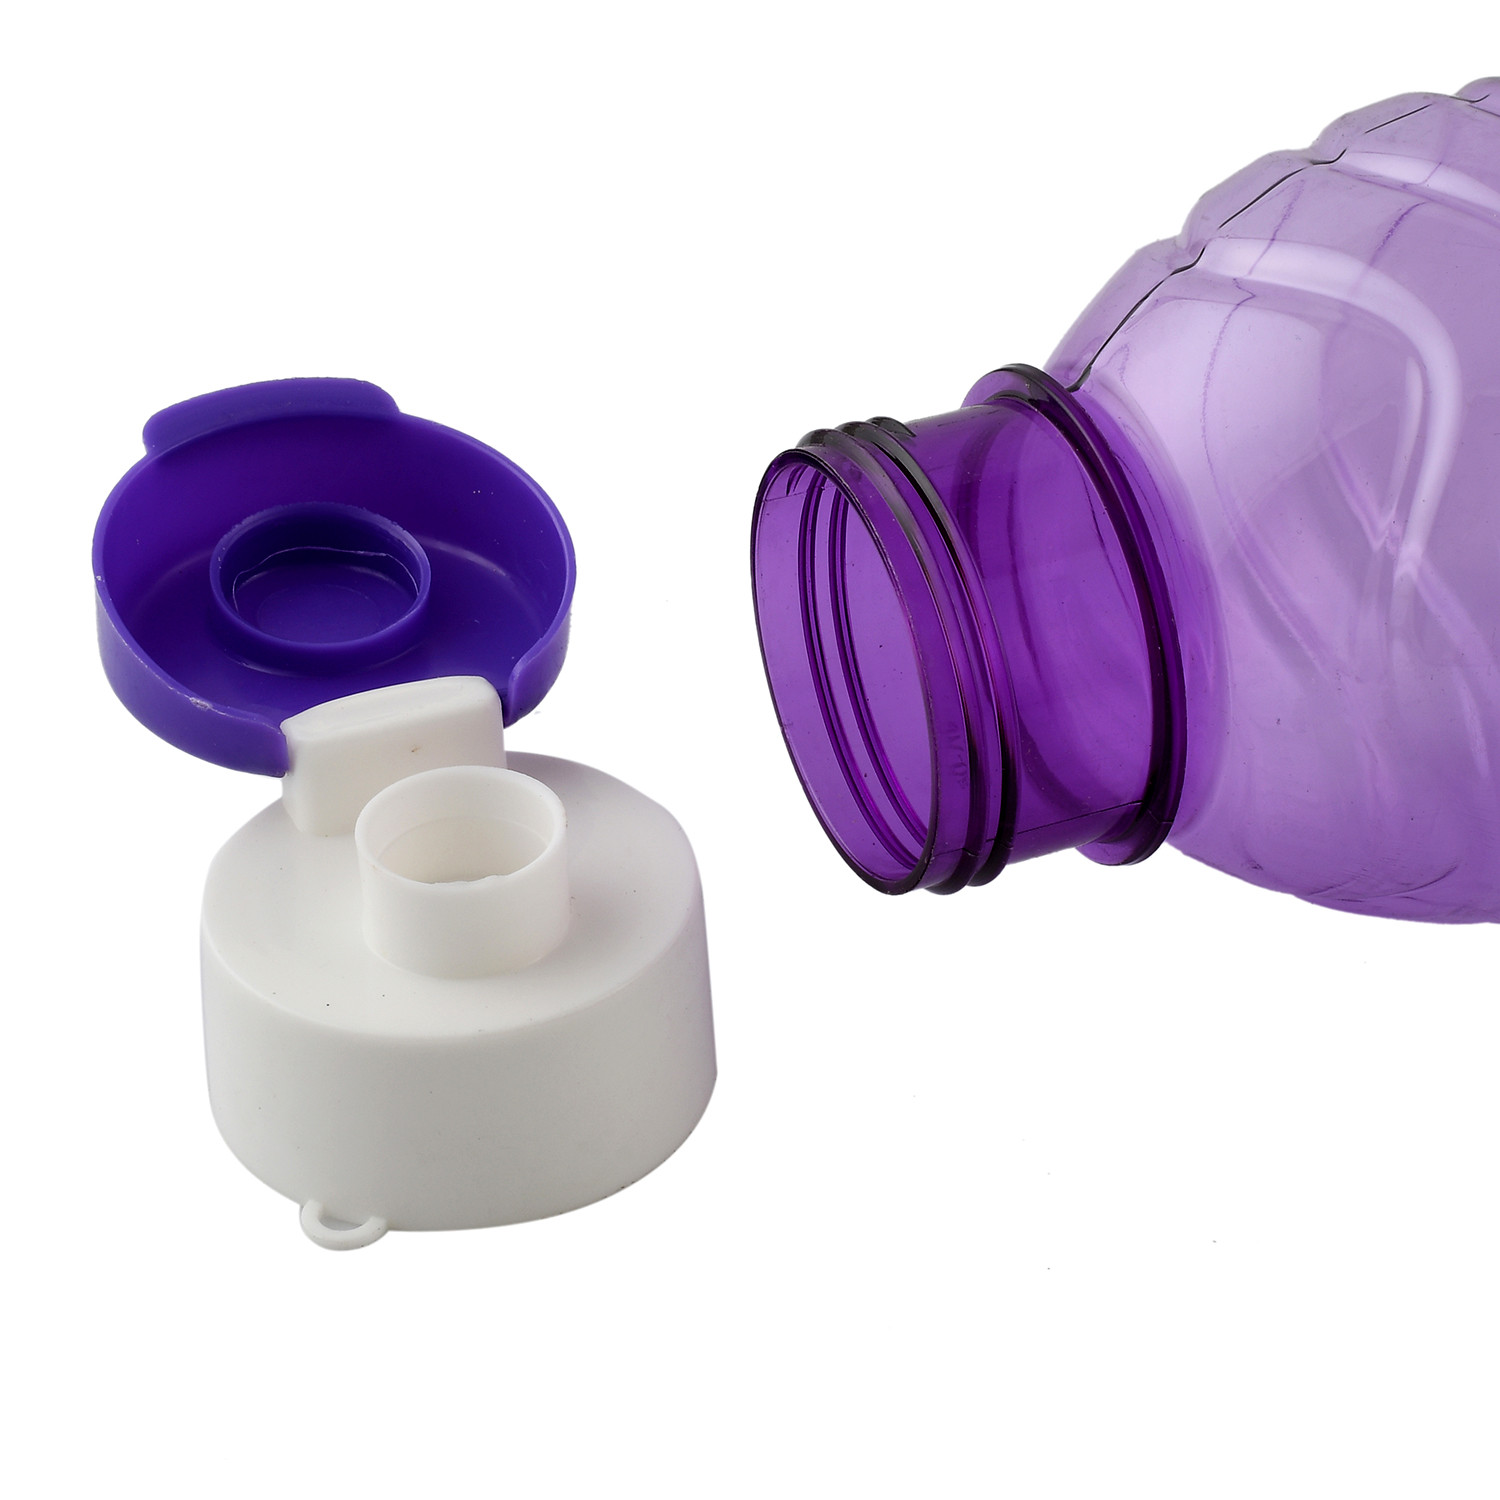 Kuber Industries Plastic Fridge Water Bottle Set with Flip Cap (1000ml, Pink & Purple)-KUBMART1498